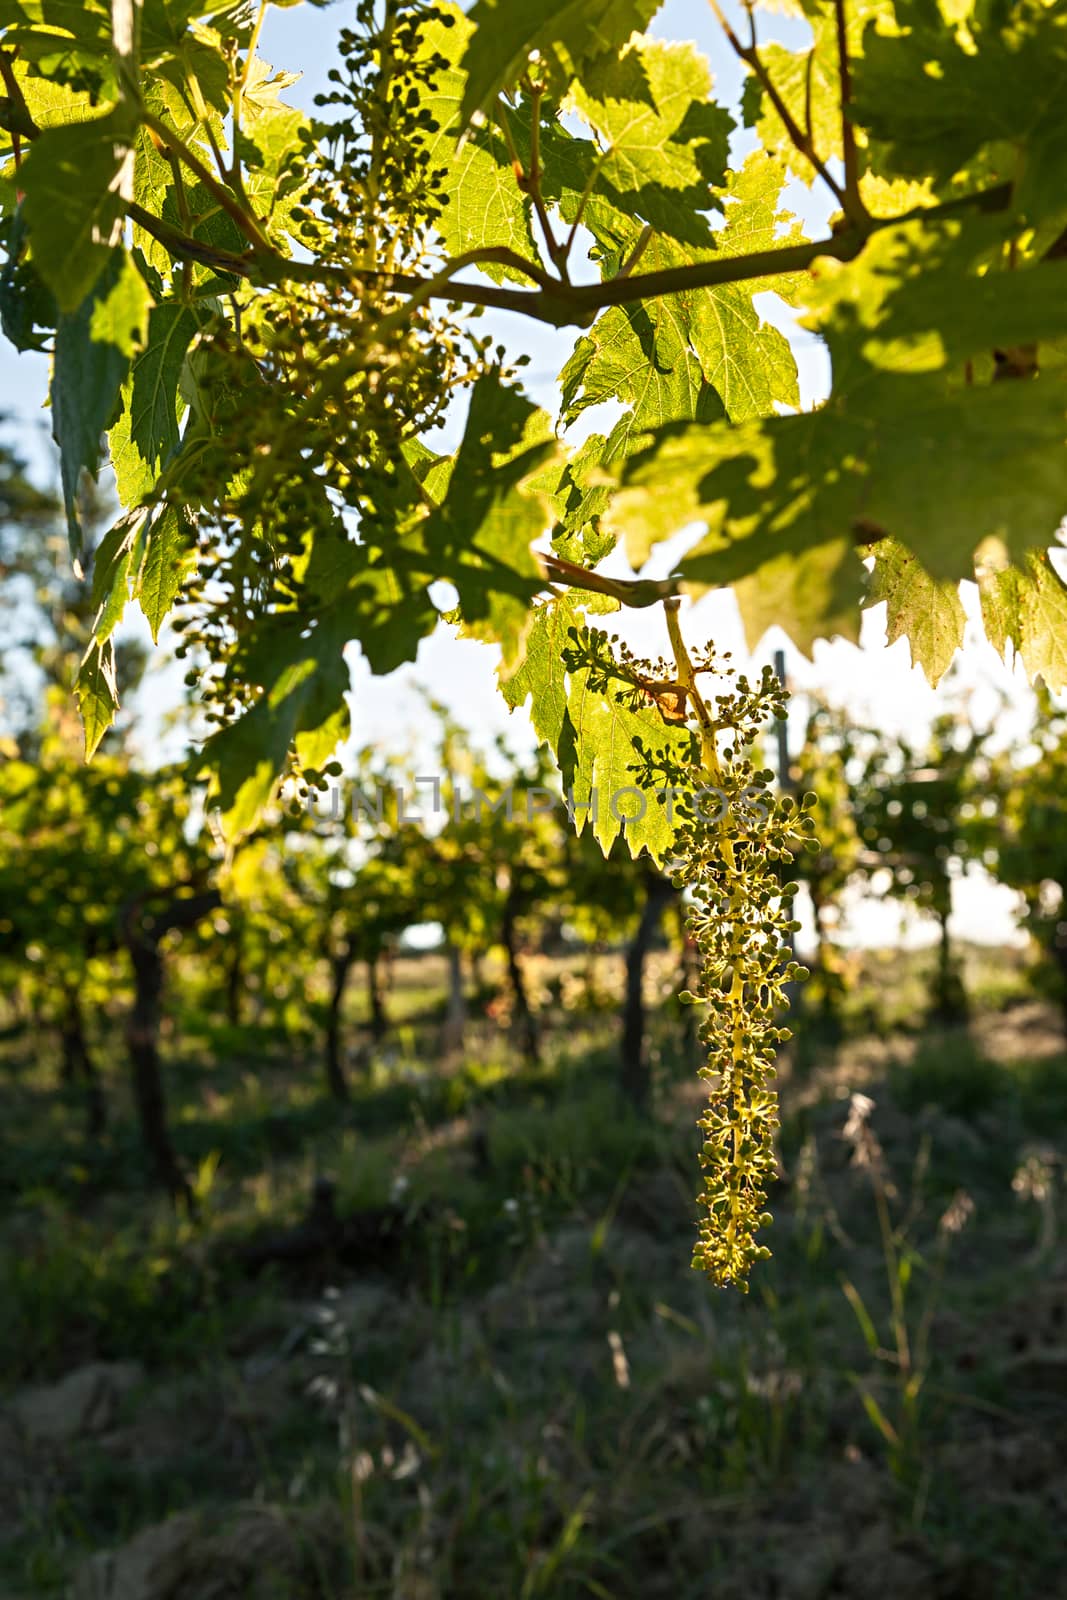 Small green grapes on vineyard by LuigiMorbidelli